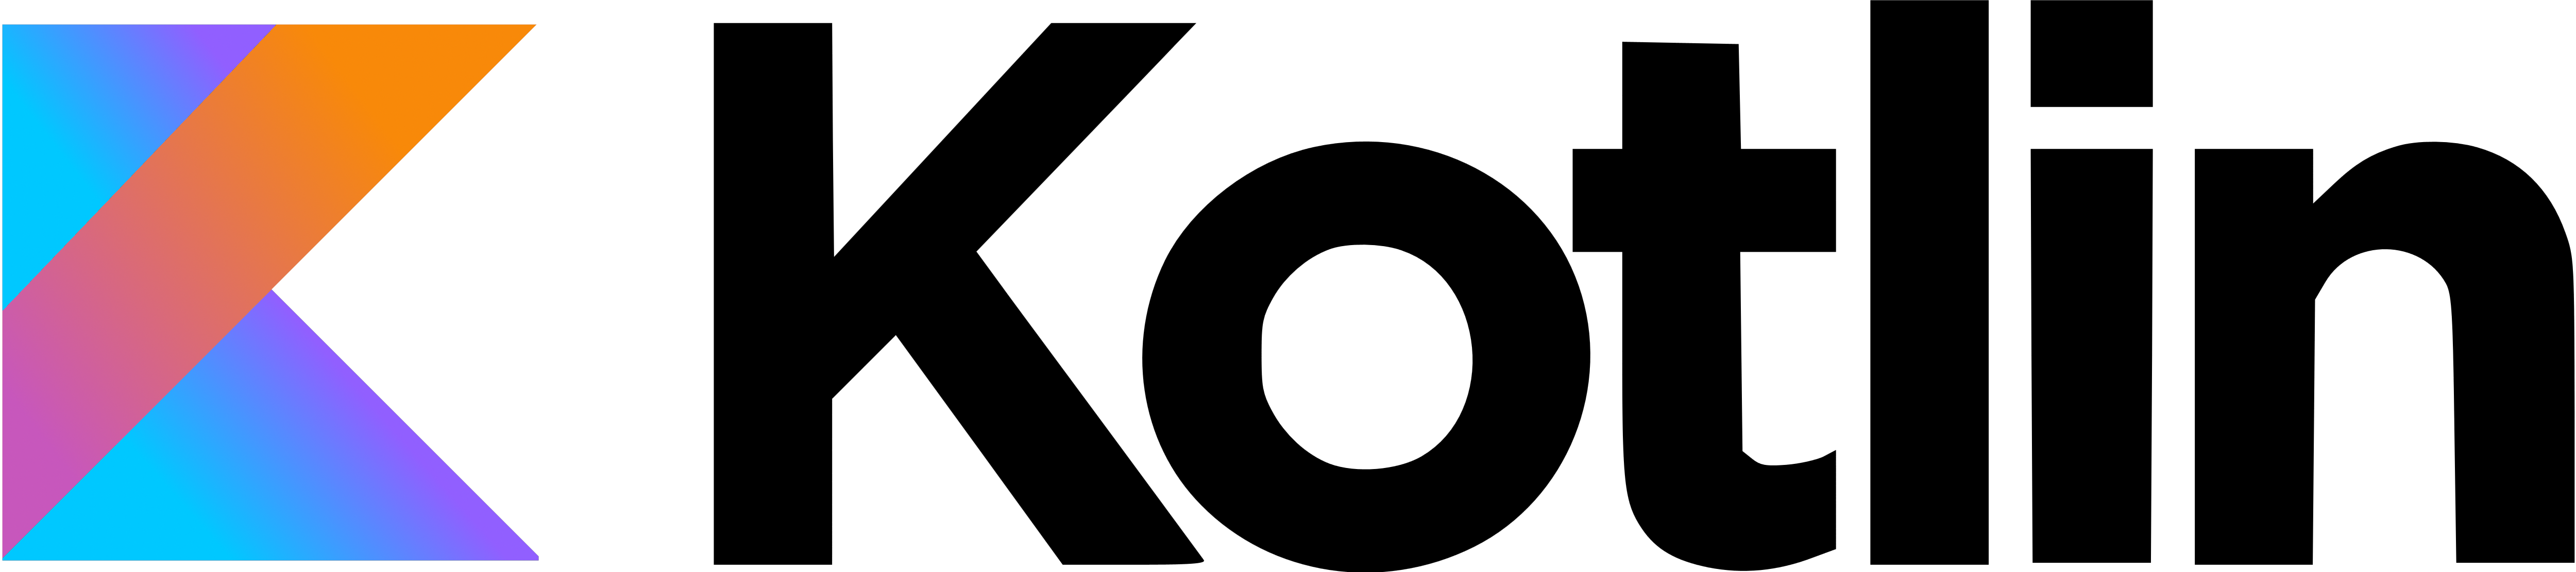 Image result for kotlin logo